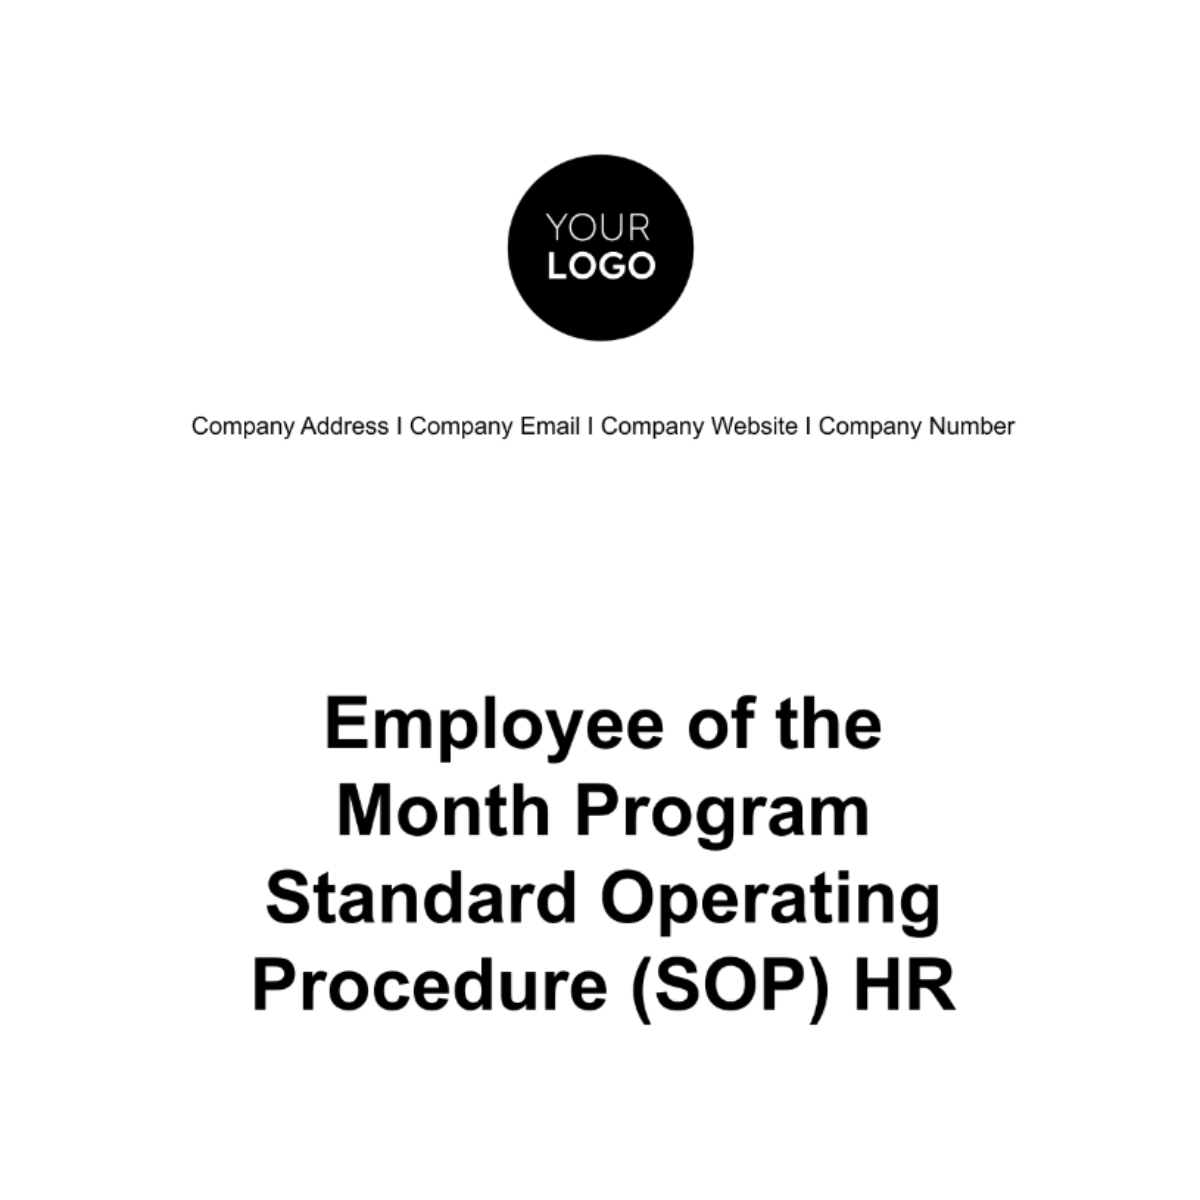 Employee of the Month Program Standard Operating Procedure (SOP) HR Template